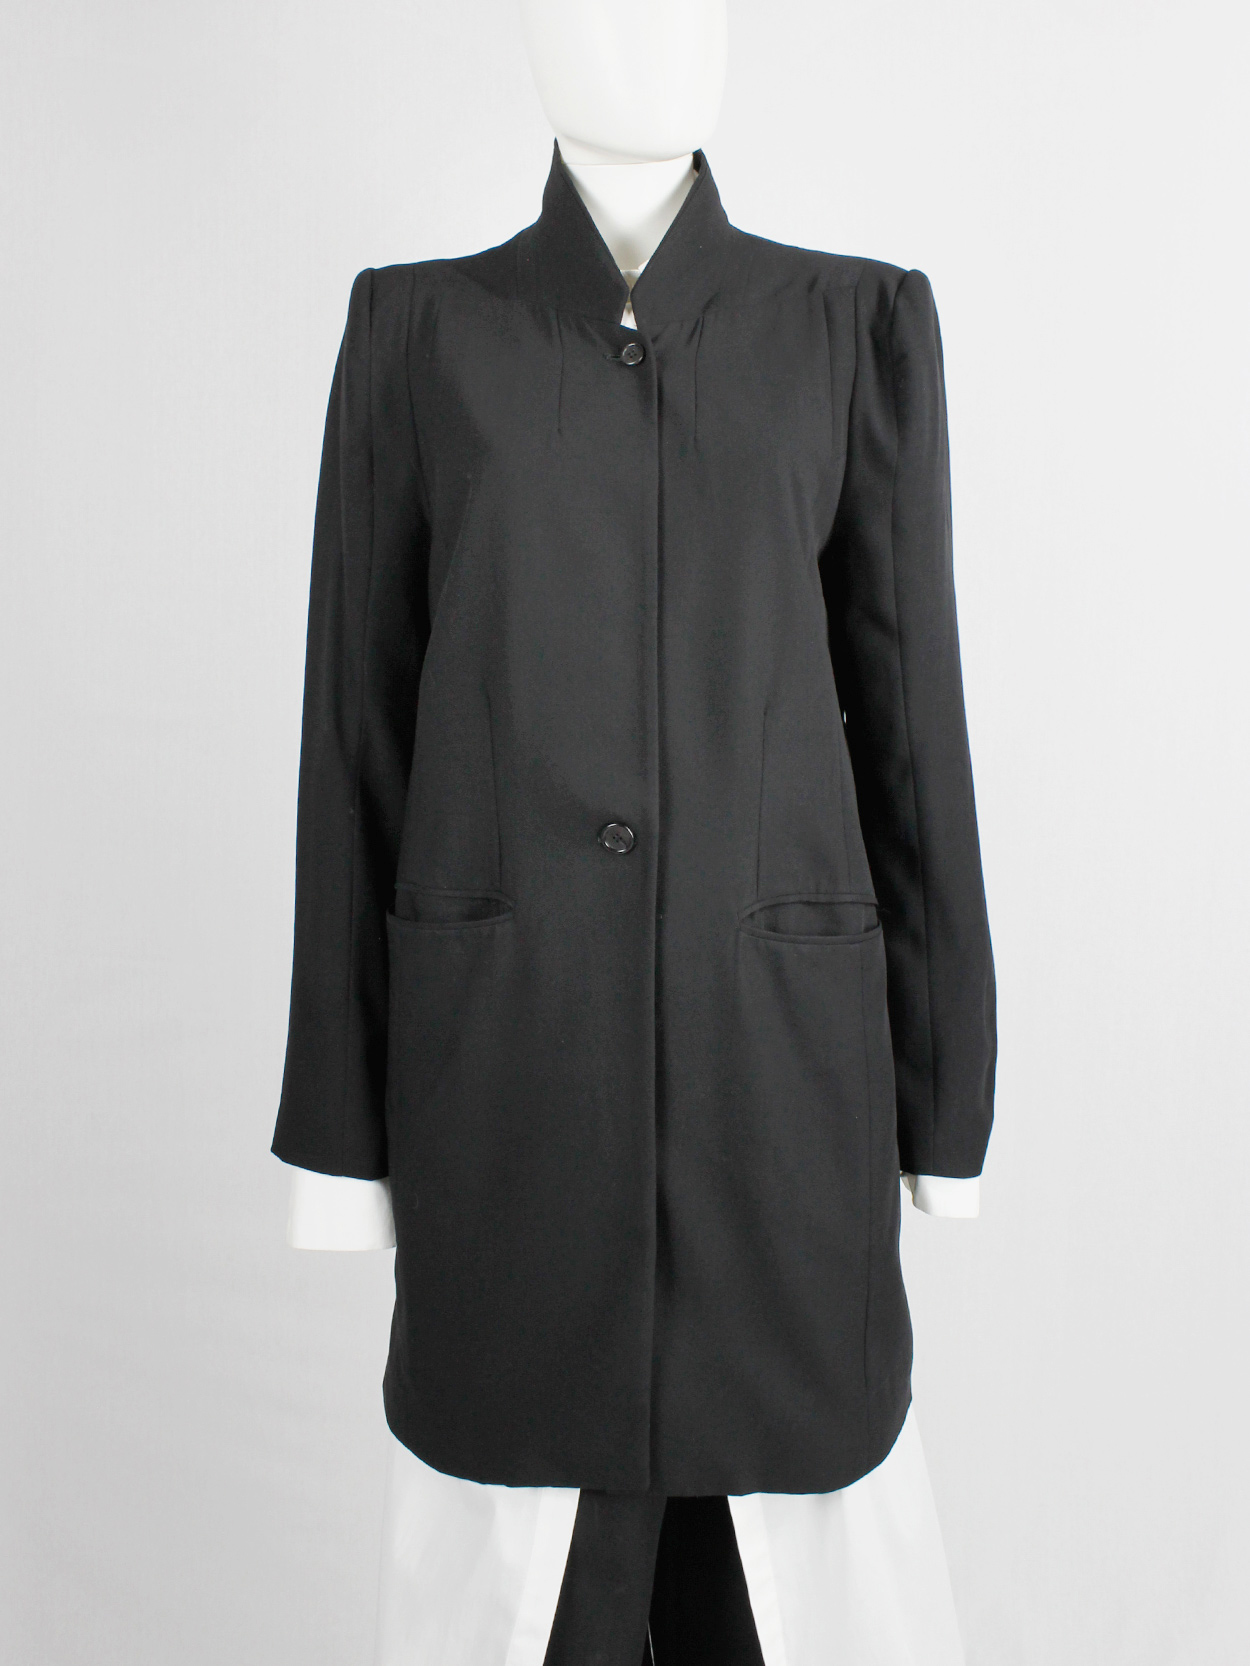 Ann Demeulemeester black oversized blazer with minimalist lapels spring 2010 (5)